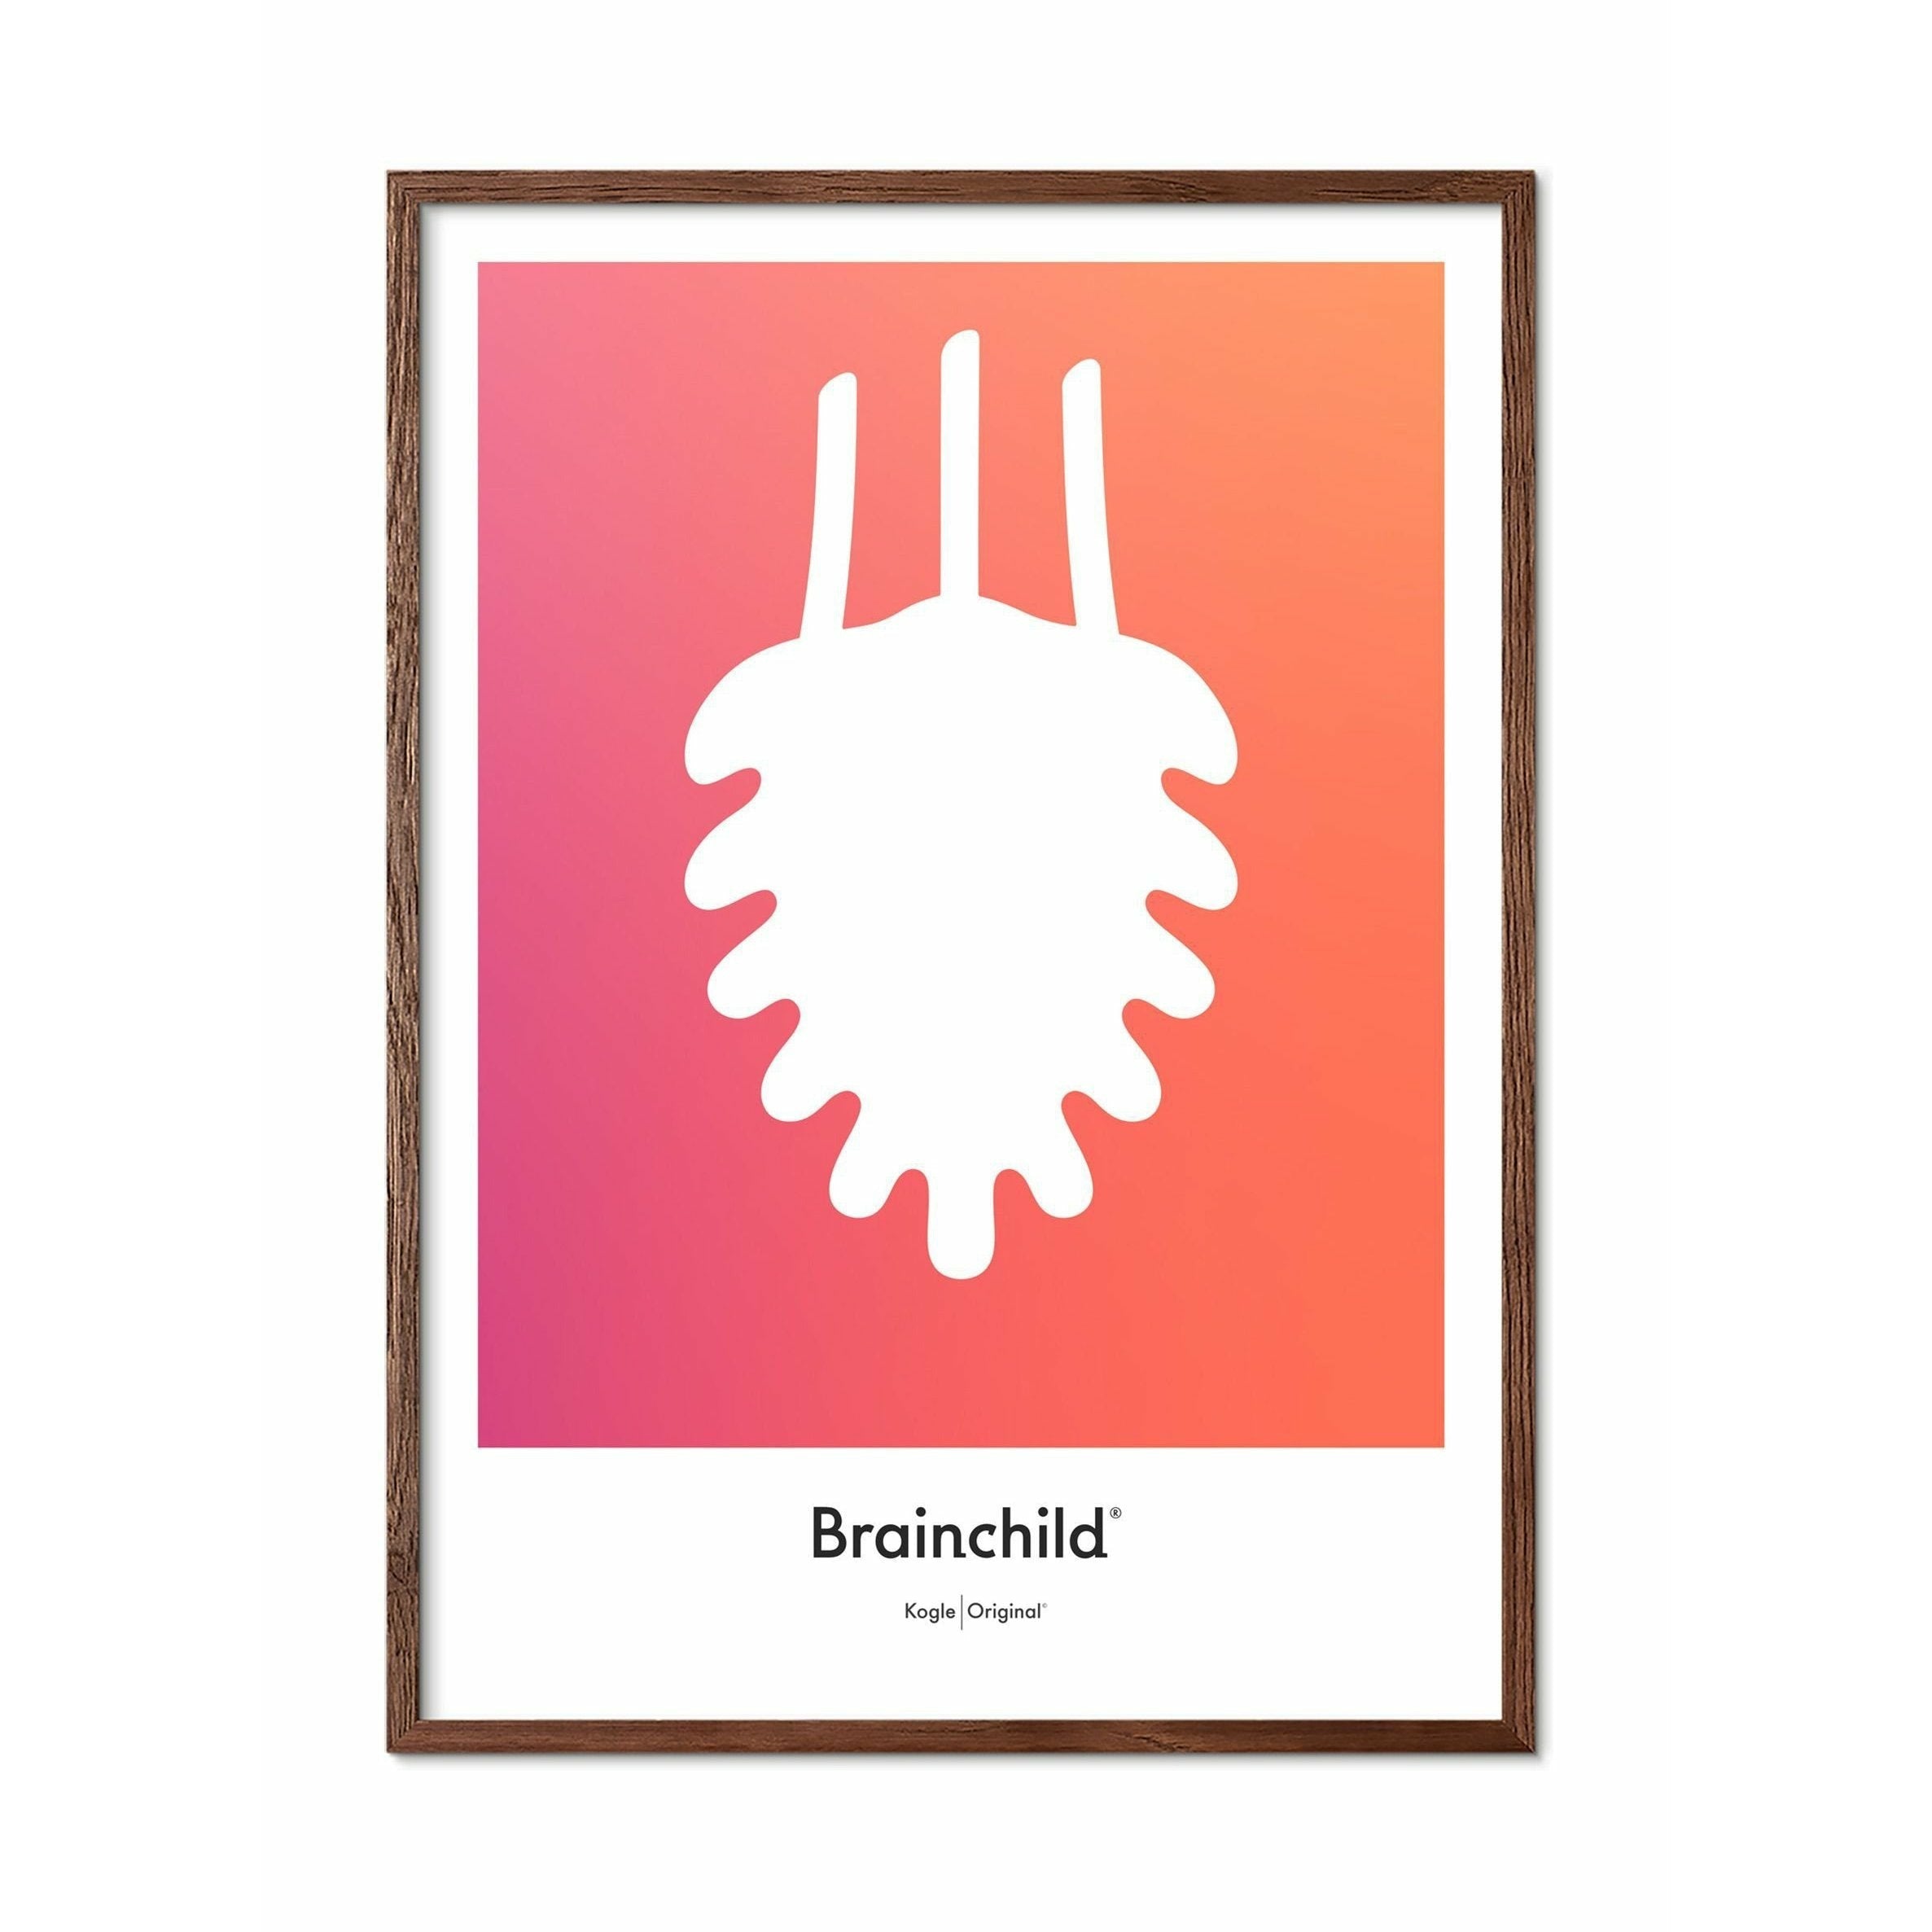 Brainchild Kogle Designikon Plakat, Ramme I Mørkt Træ 70X100 Cm, Orange